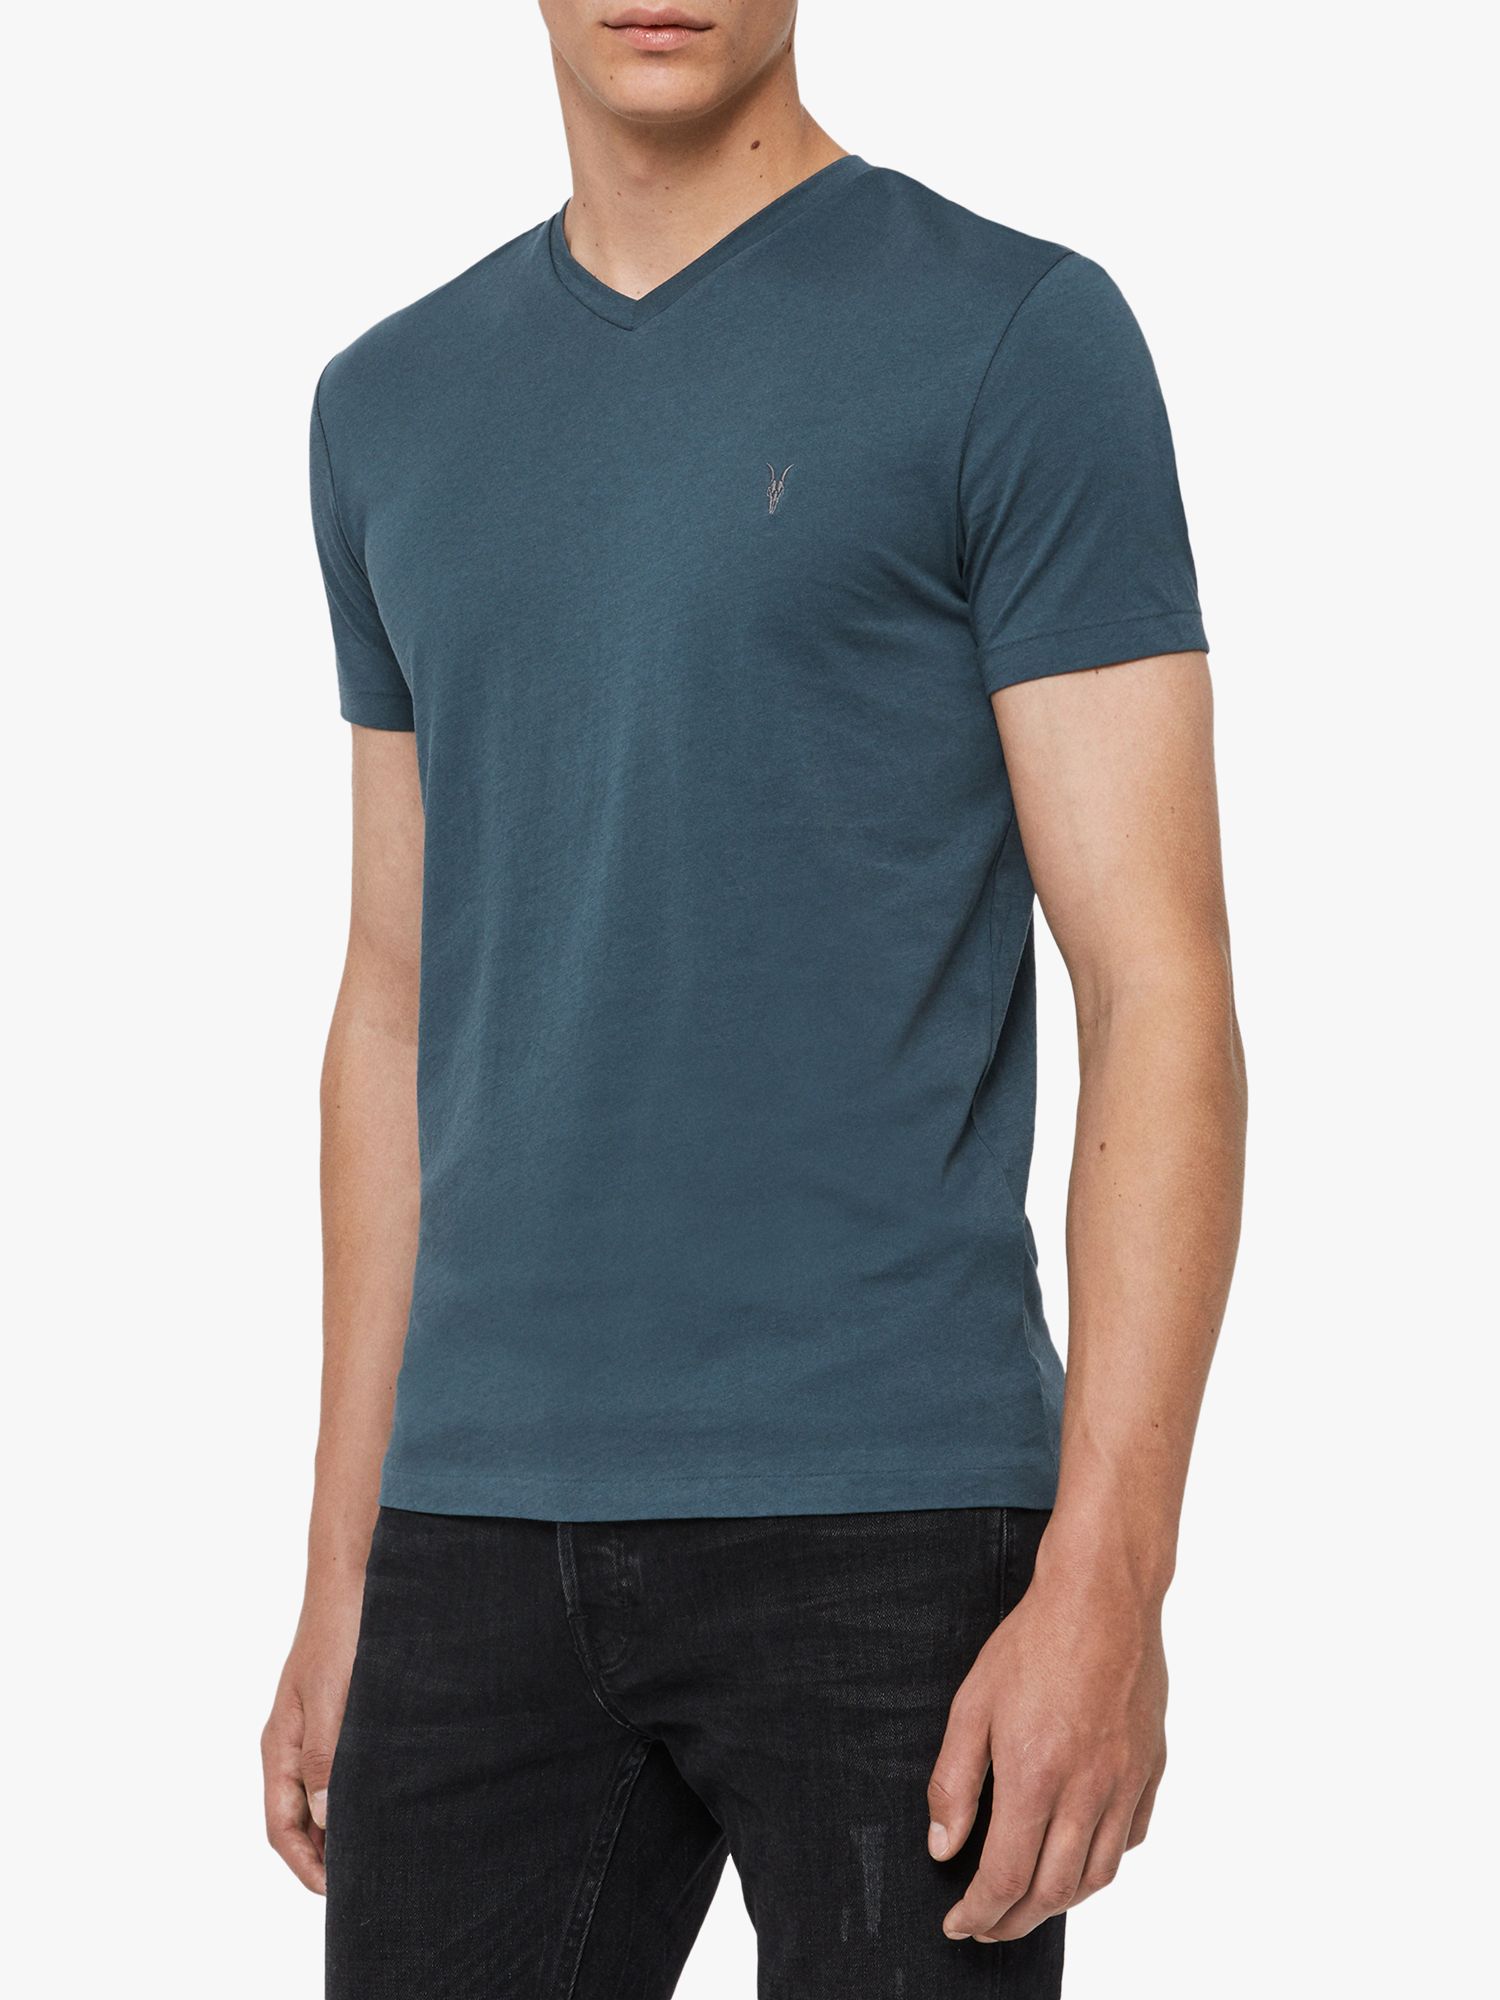 AllSaints Tonic V-Neck T-Shirt, Vault Blue